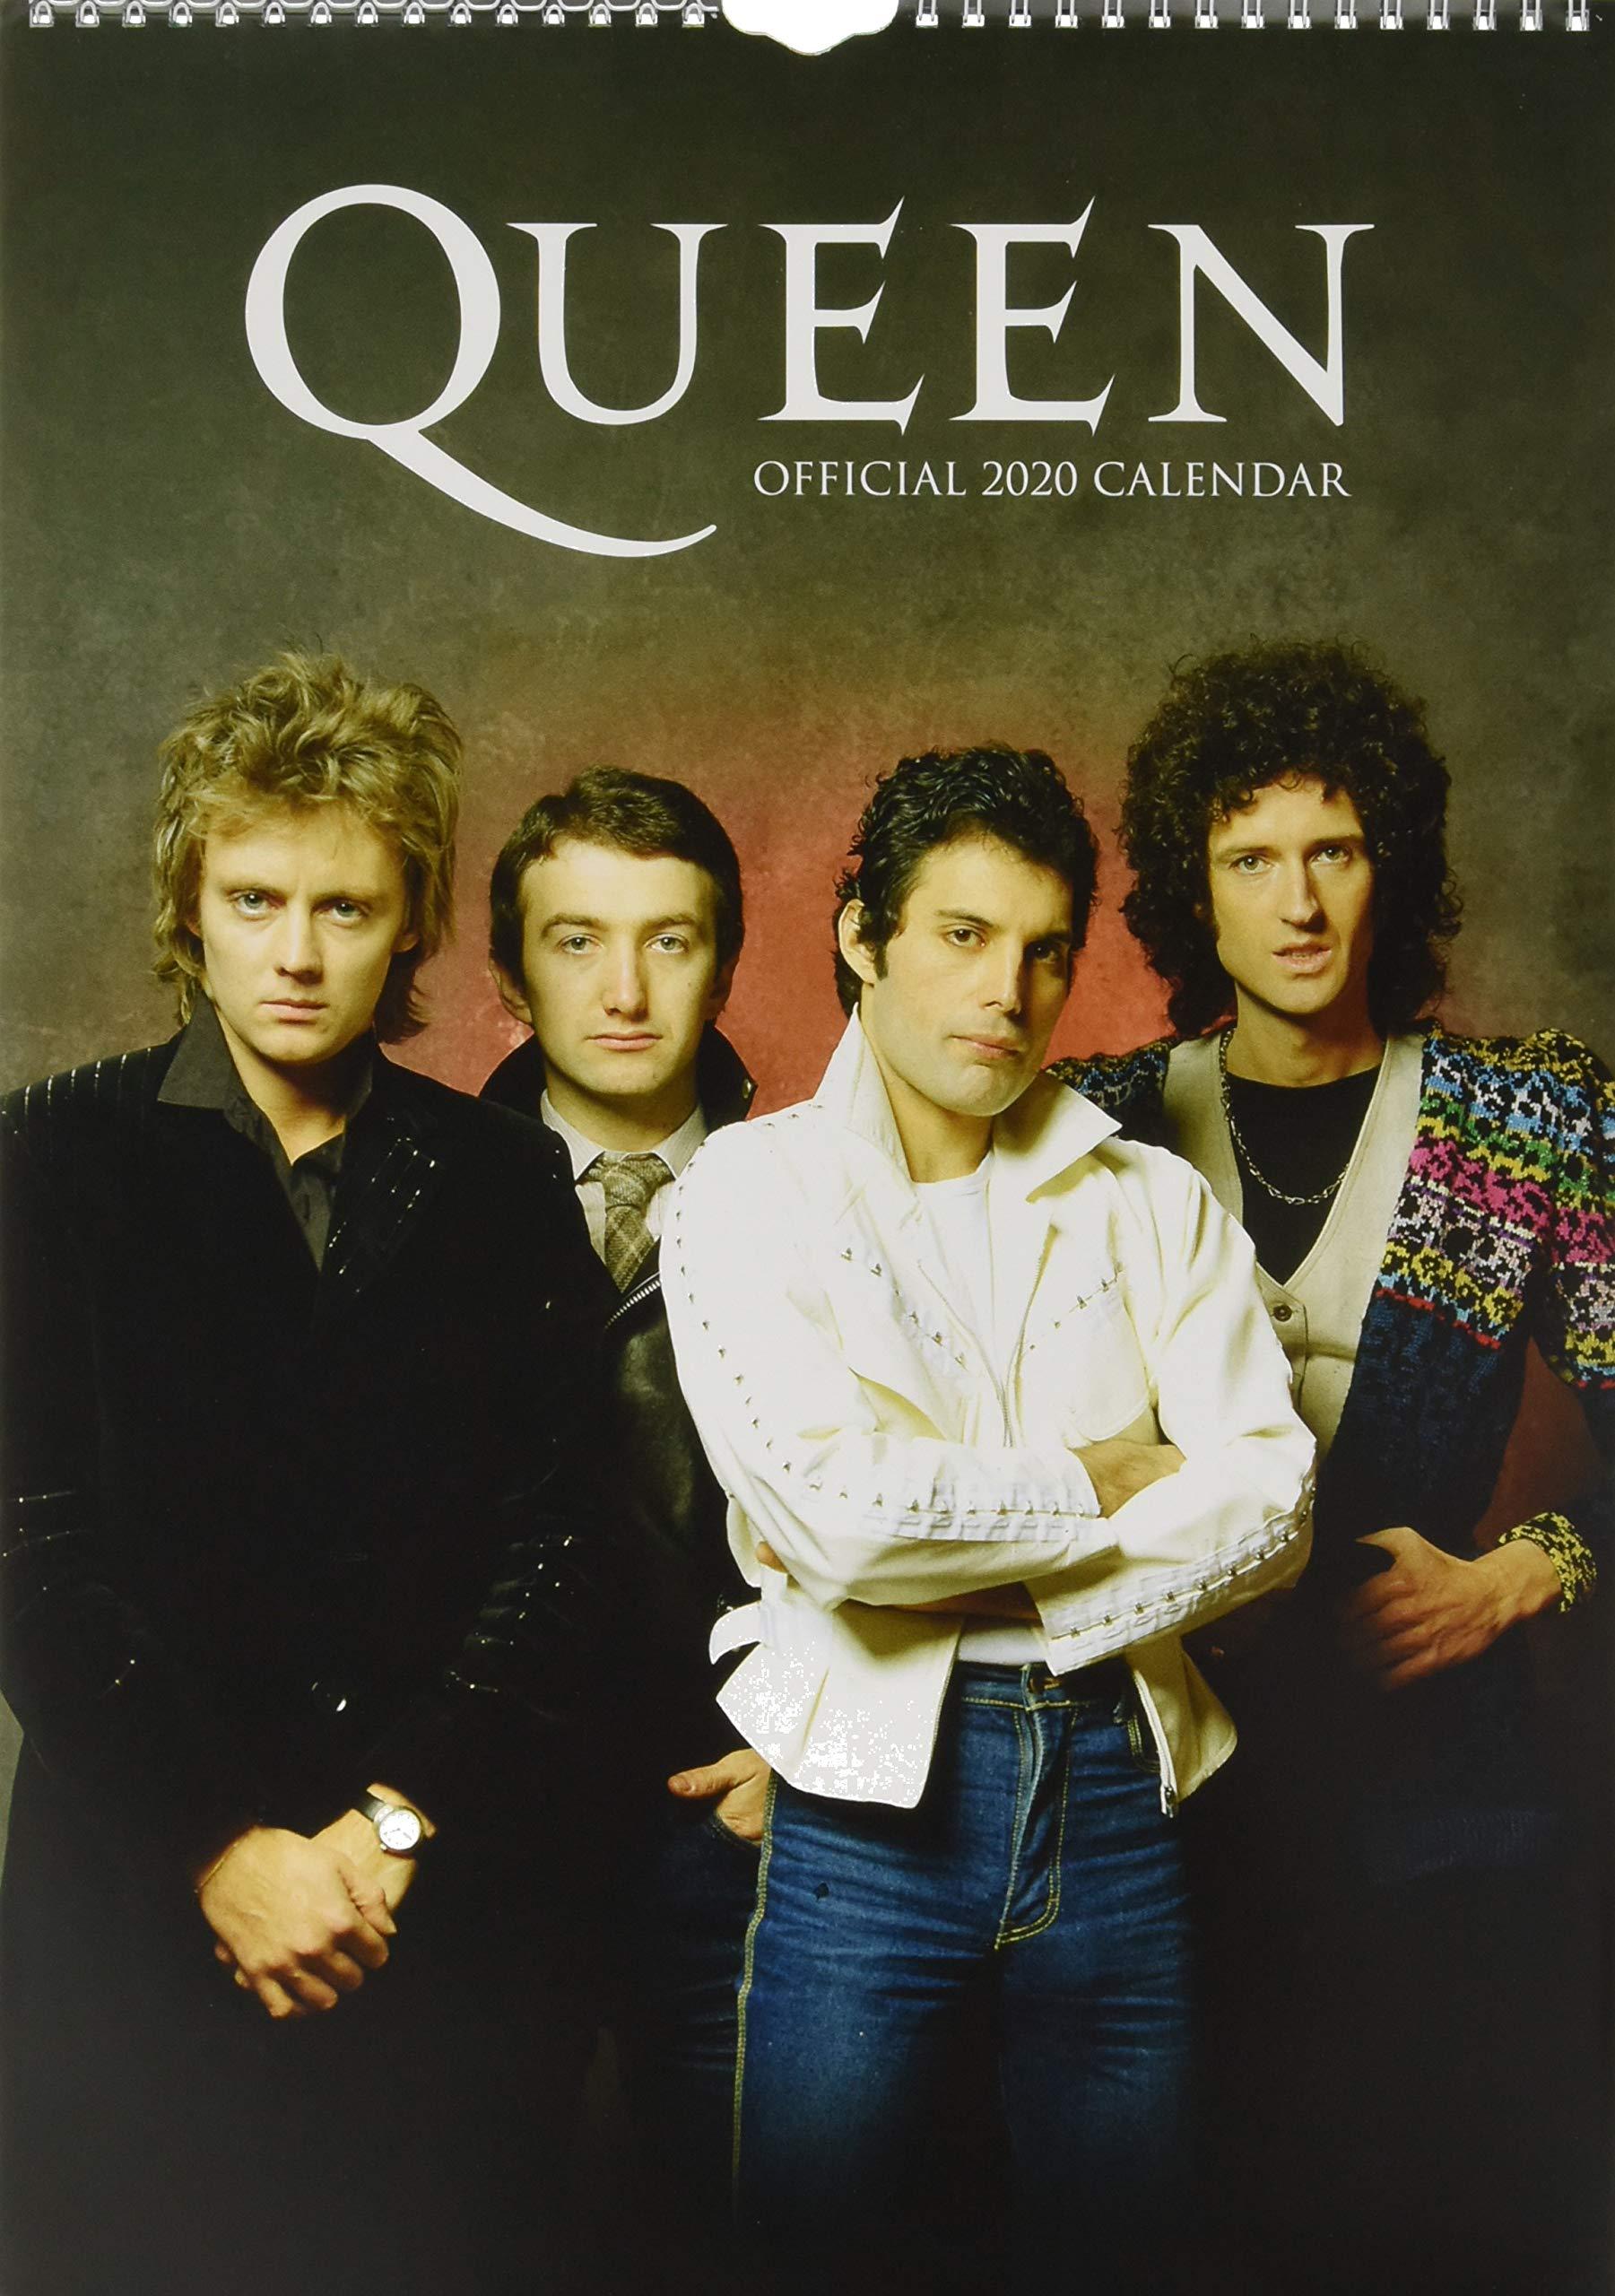  10 datos que seguramente no sabías de la banda Queen 